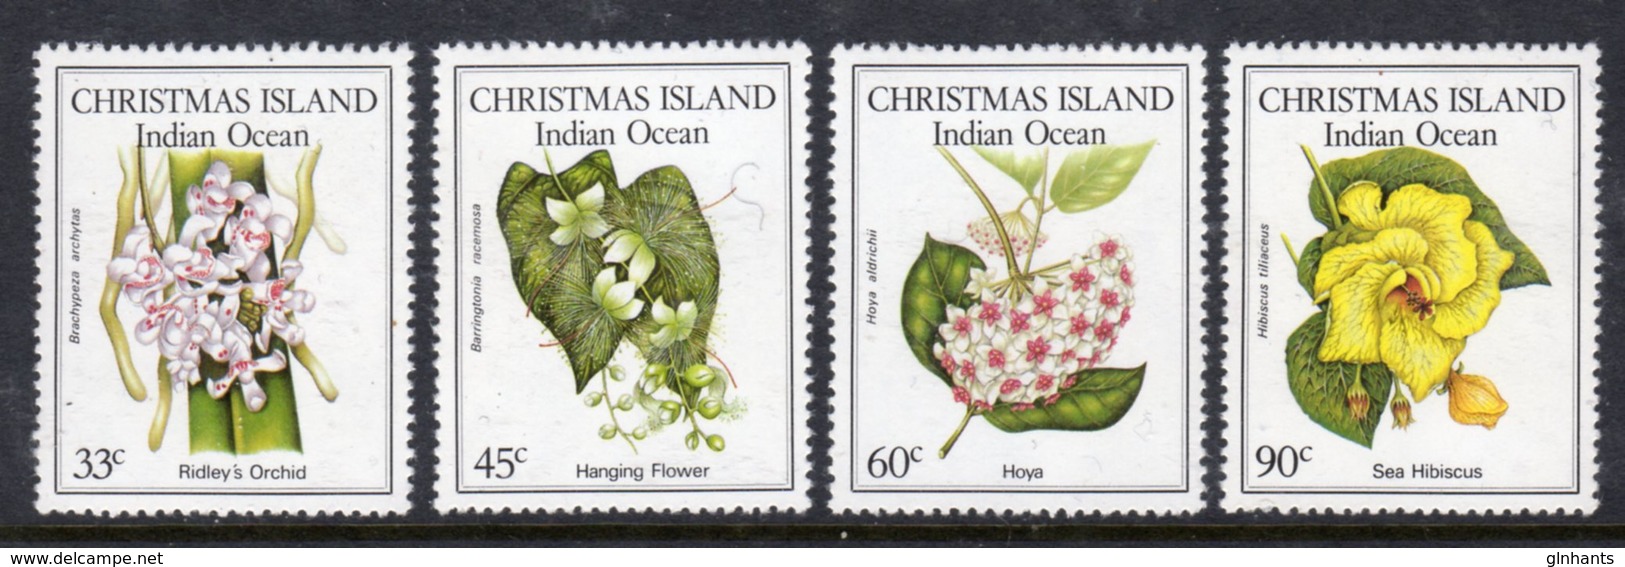 CHRISTMAS ISLAND - 1986 NATIVE FLOWERS SET (4V) FINE MNH ** SG 216-219 - Christmas Island